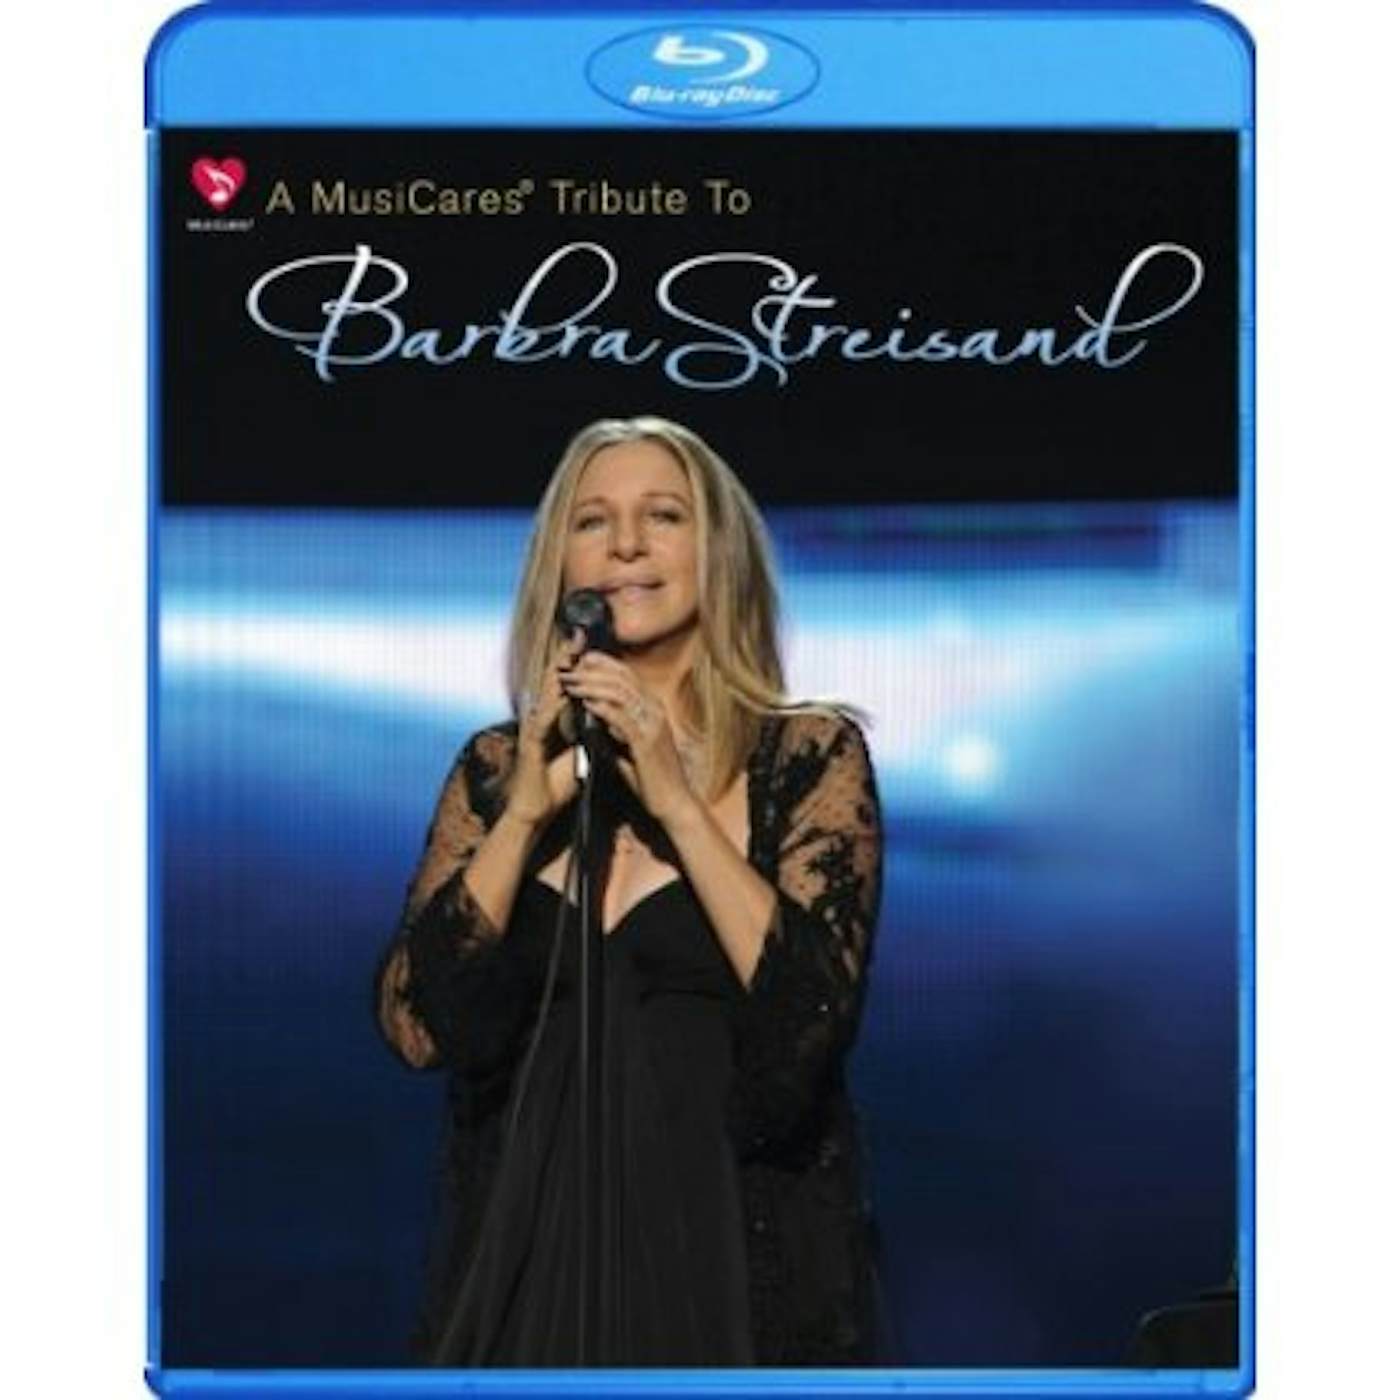 MUSICARES TRIBUTE TO BARBRA STREISAND Blu-ray